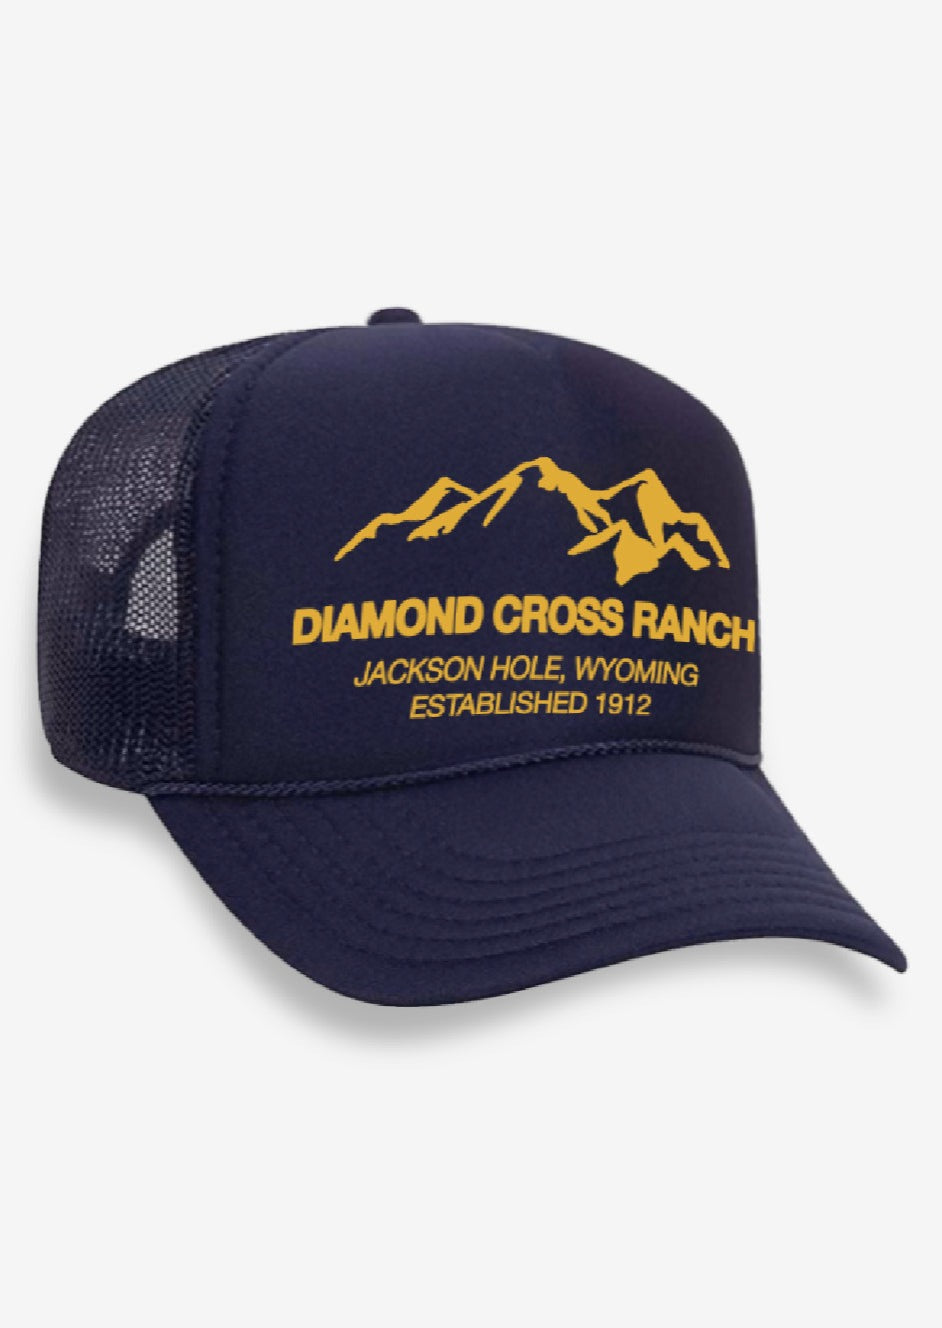 Diamond Cross Ranch Cowboy Yellowstone Wyoming Mountain Trucker Cap